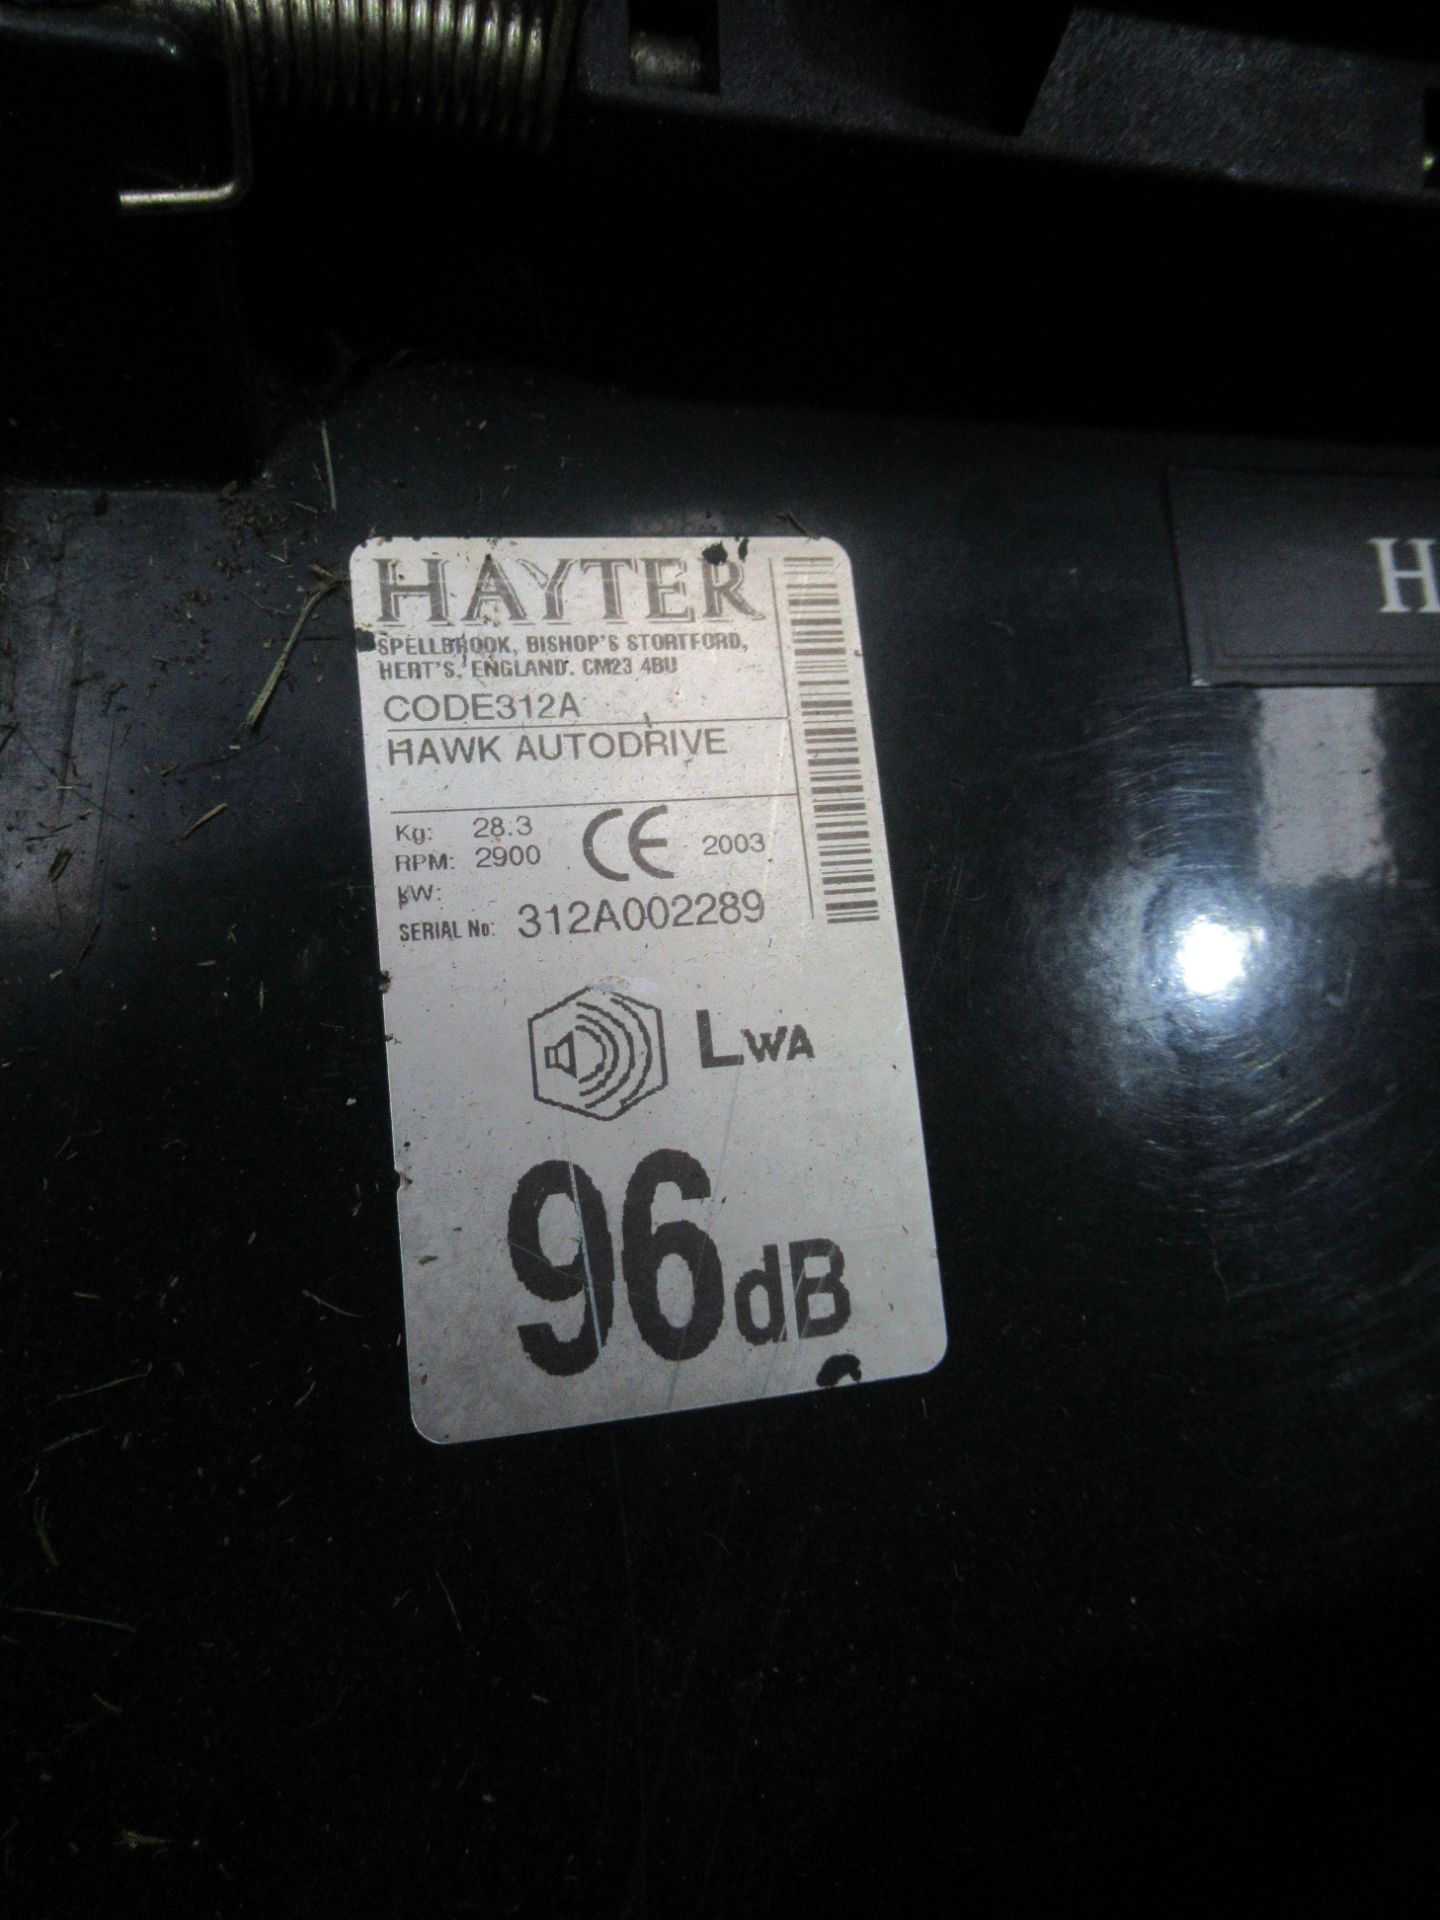 Hayter Sprint 375 Petrol Powered Lawn Mower - Image 4 of 5